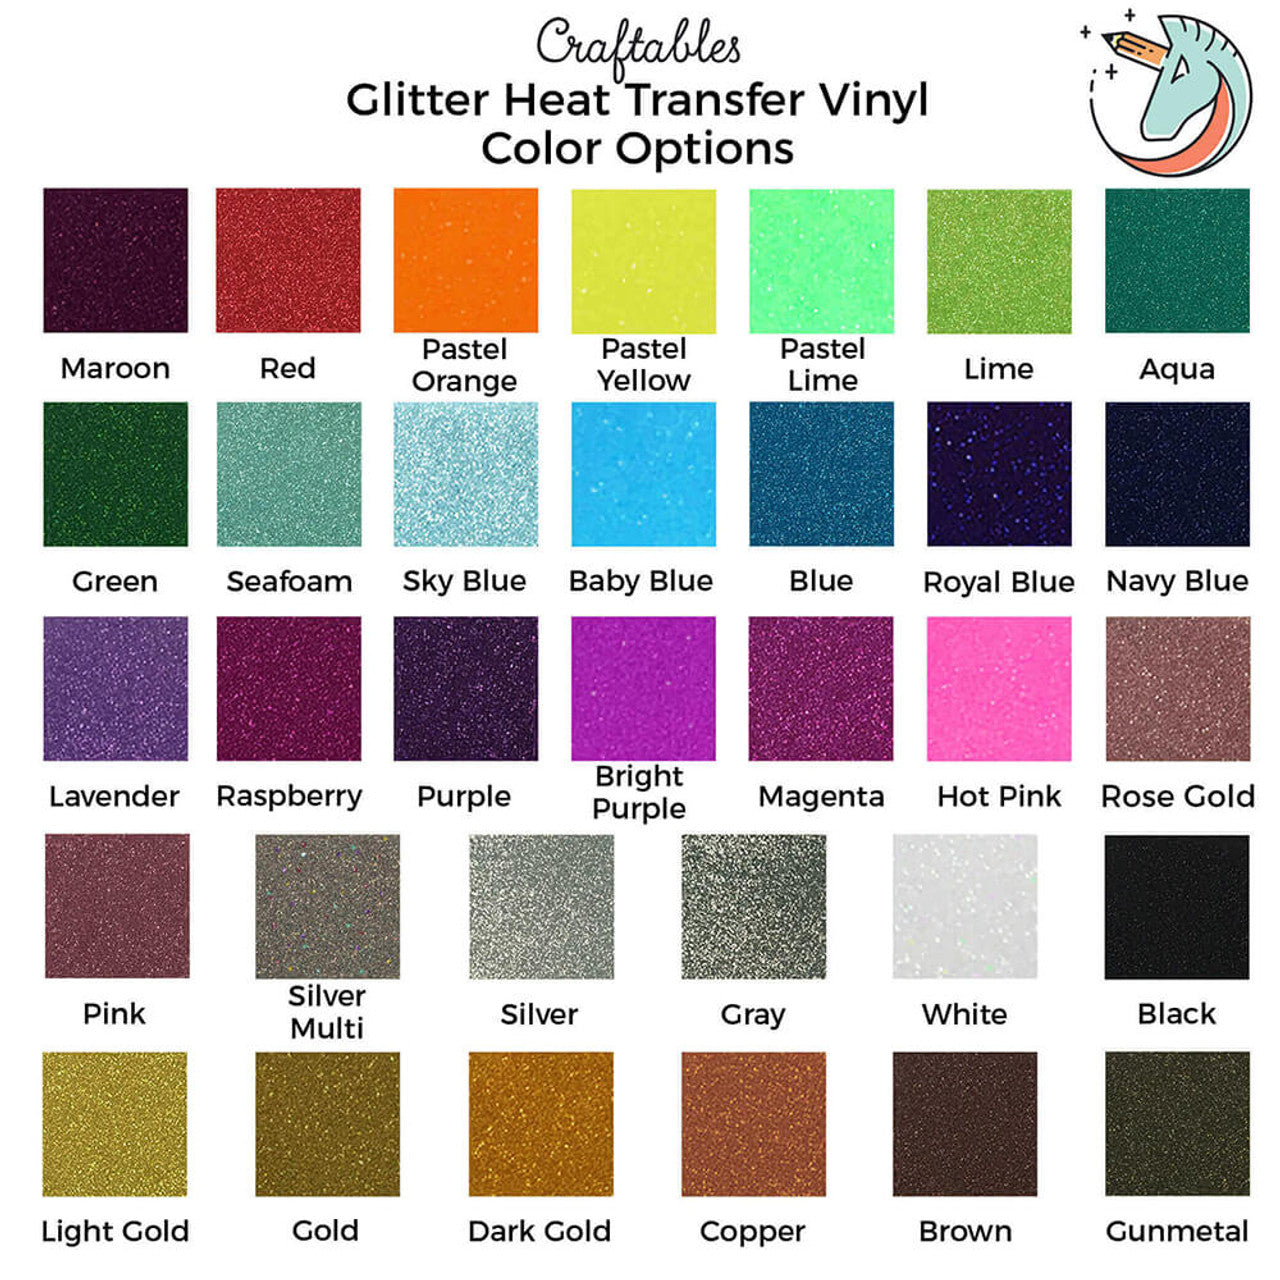 Lavender Glitter Heat Transfer Vinyl Sheets By Craftables